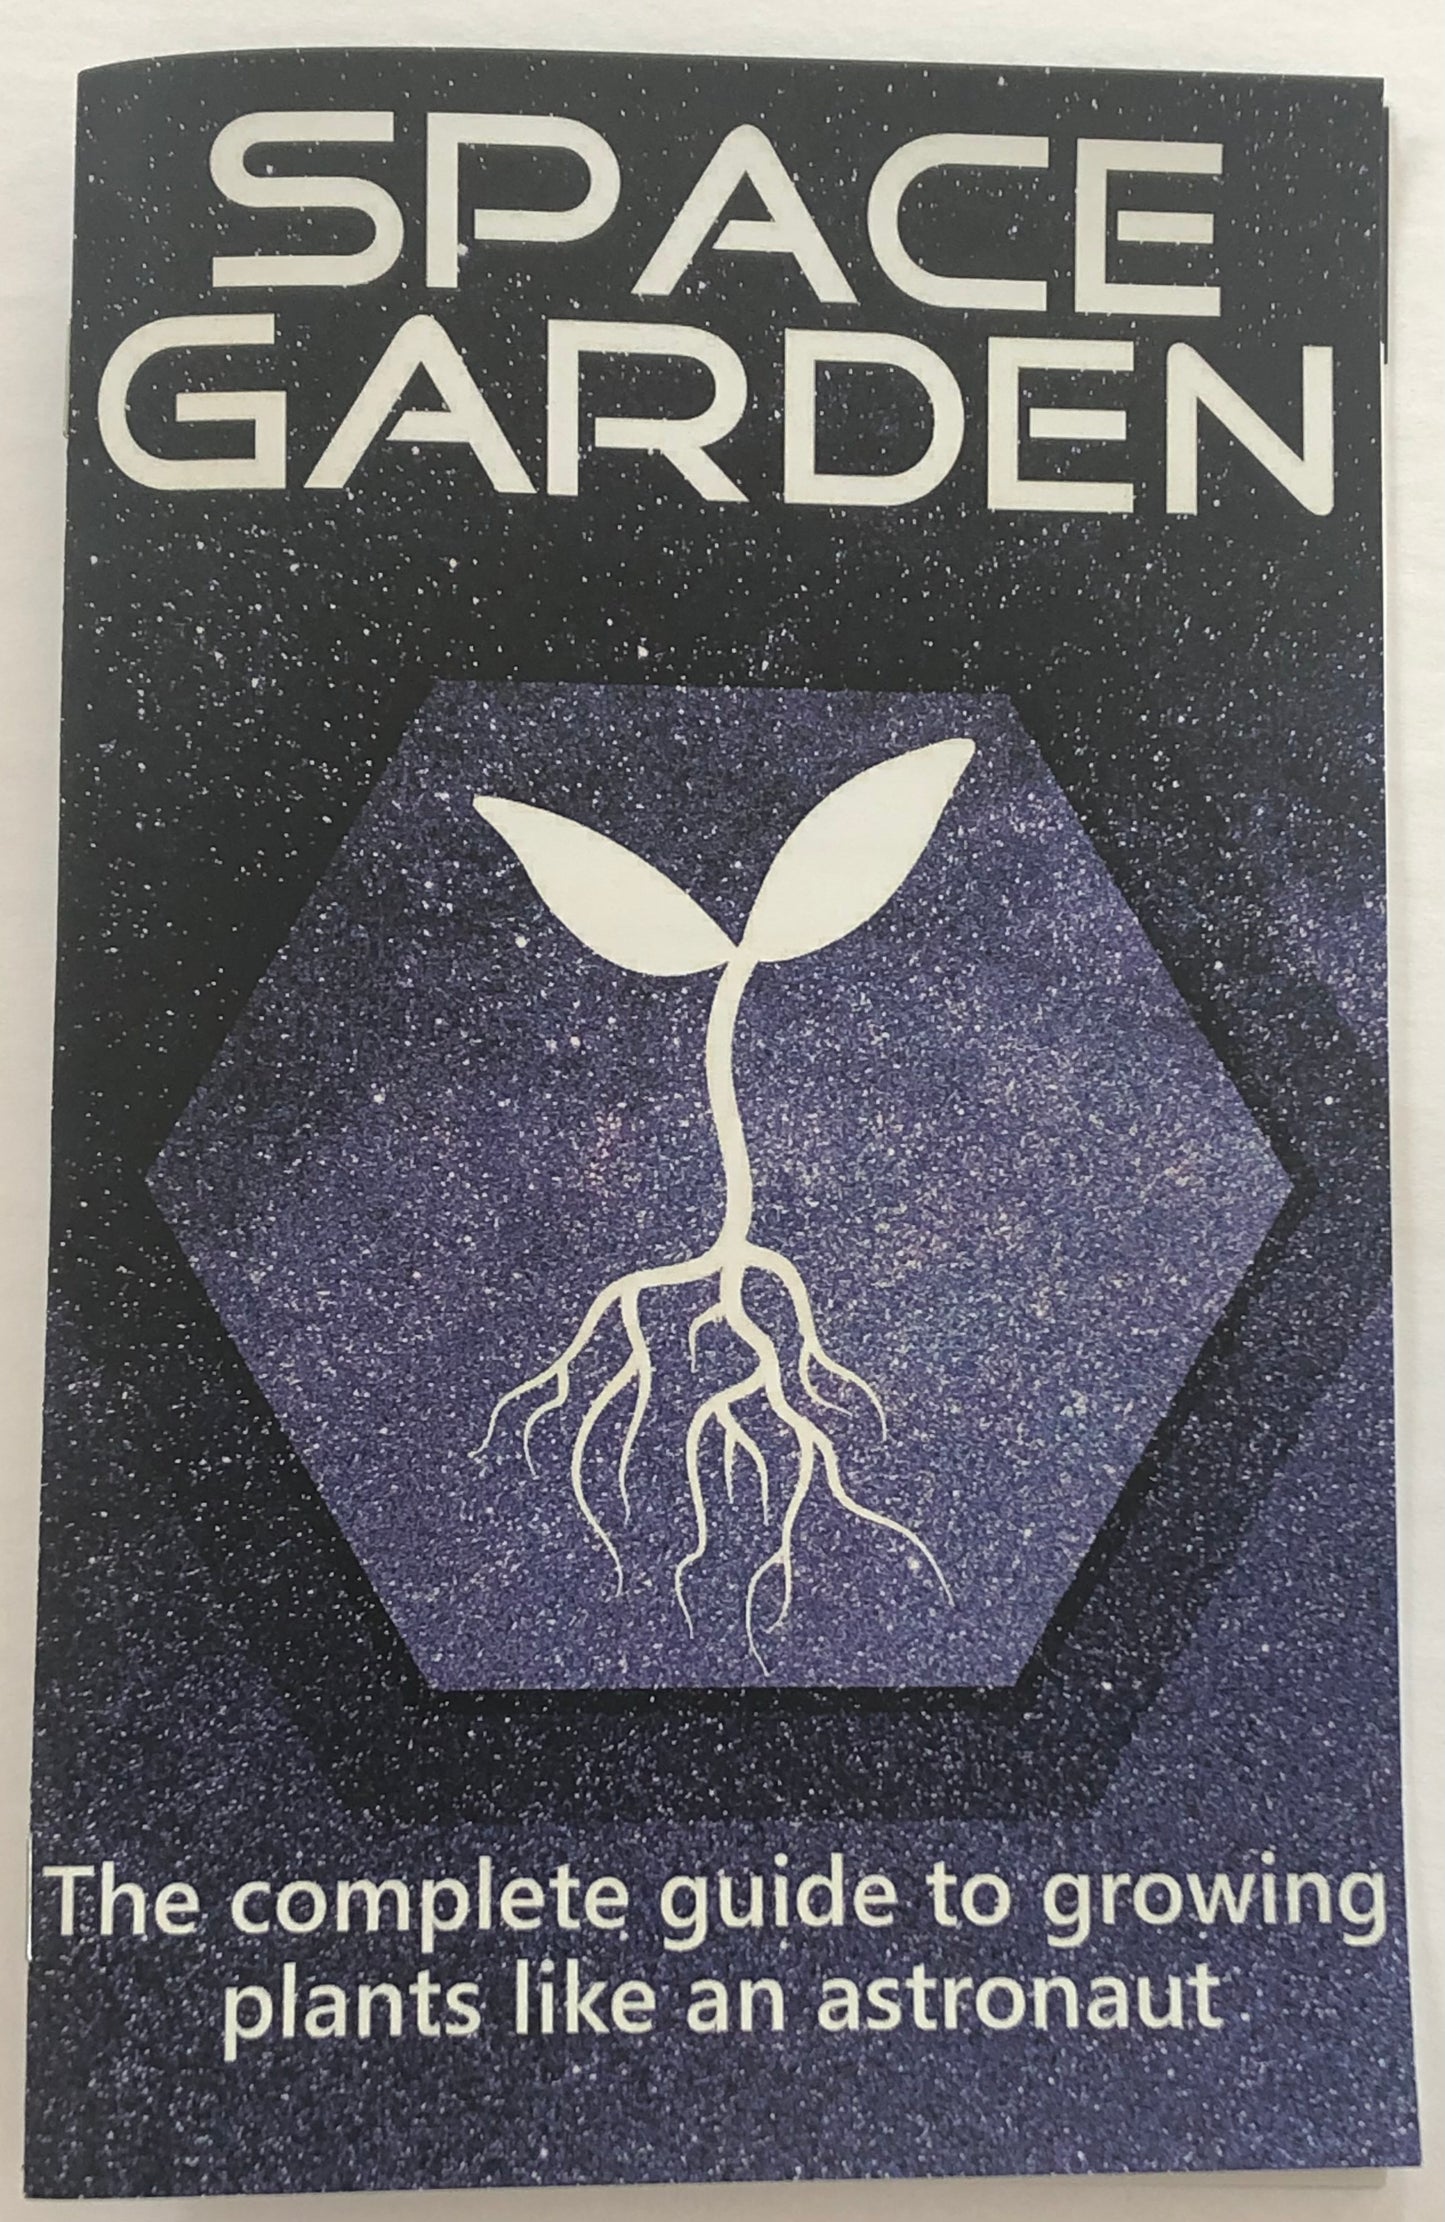 Space Garden Bundle